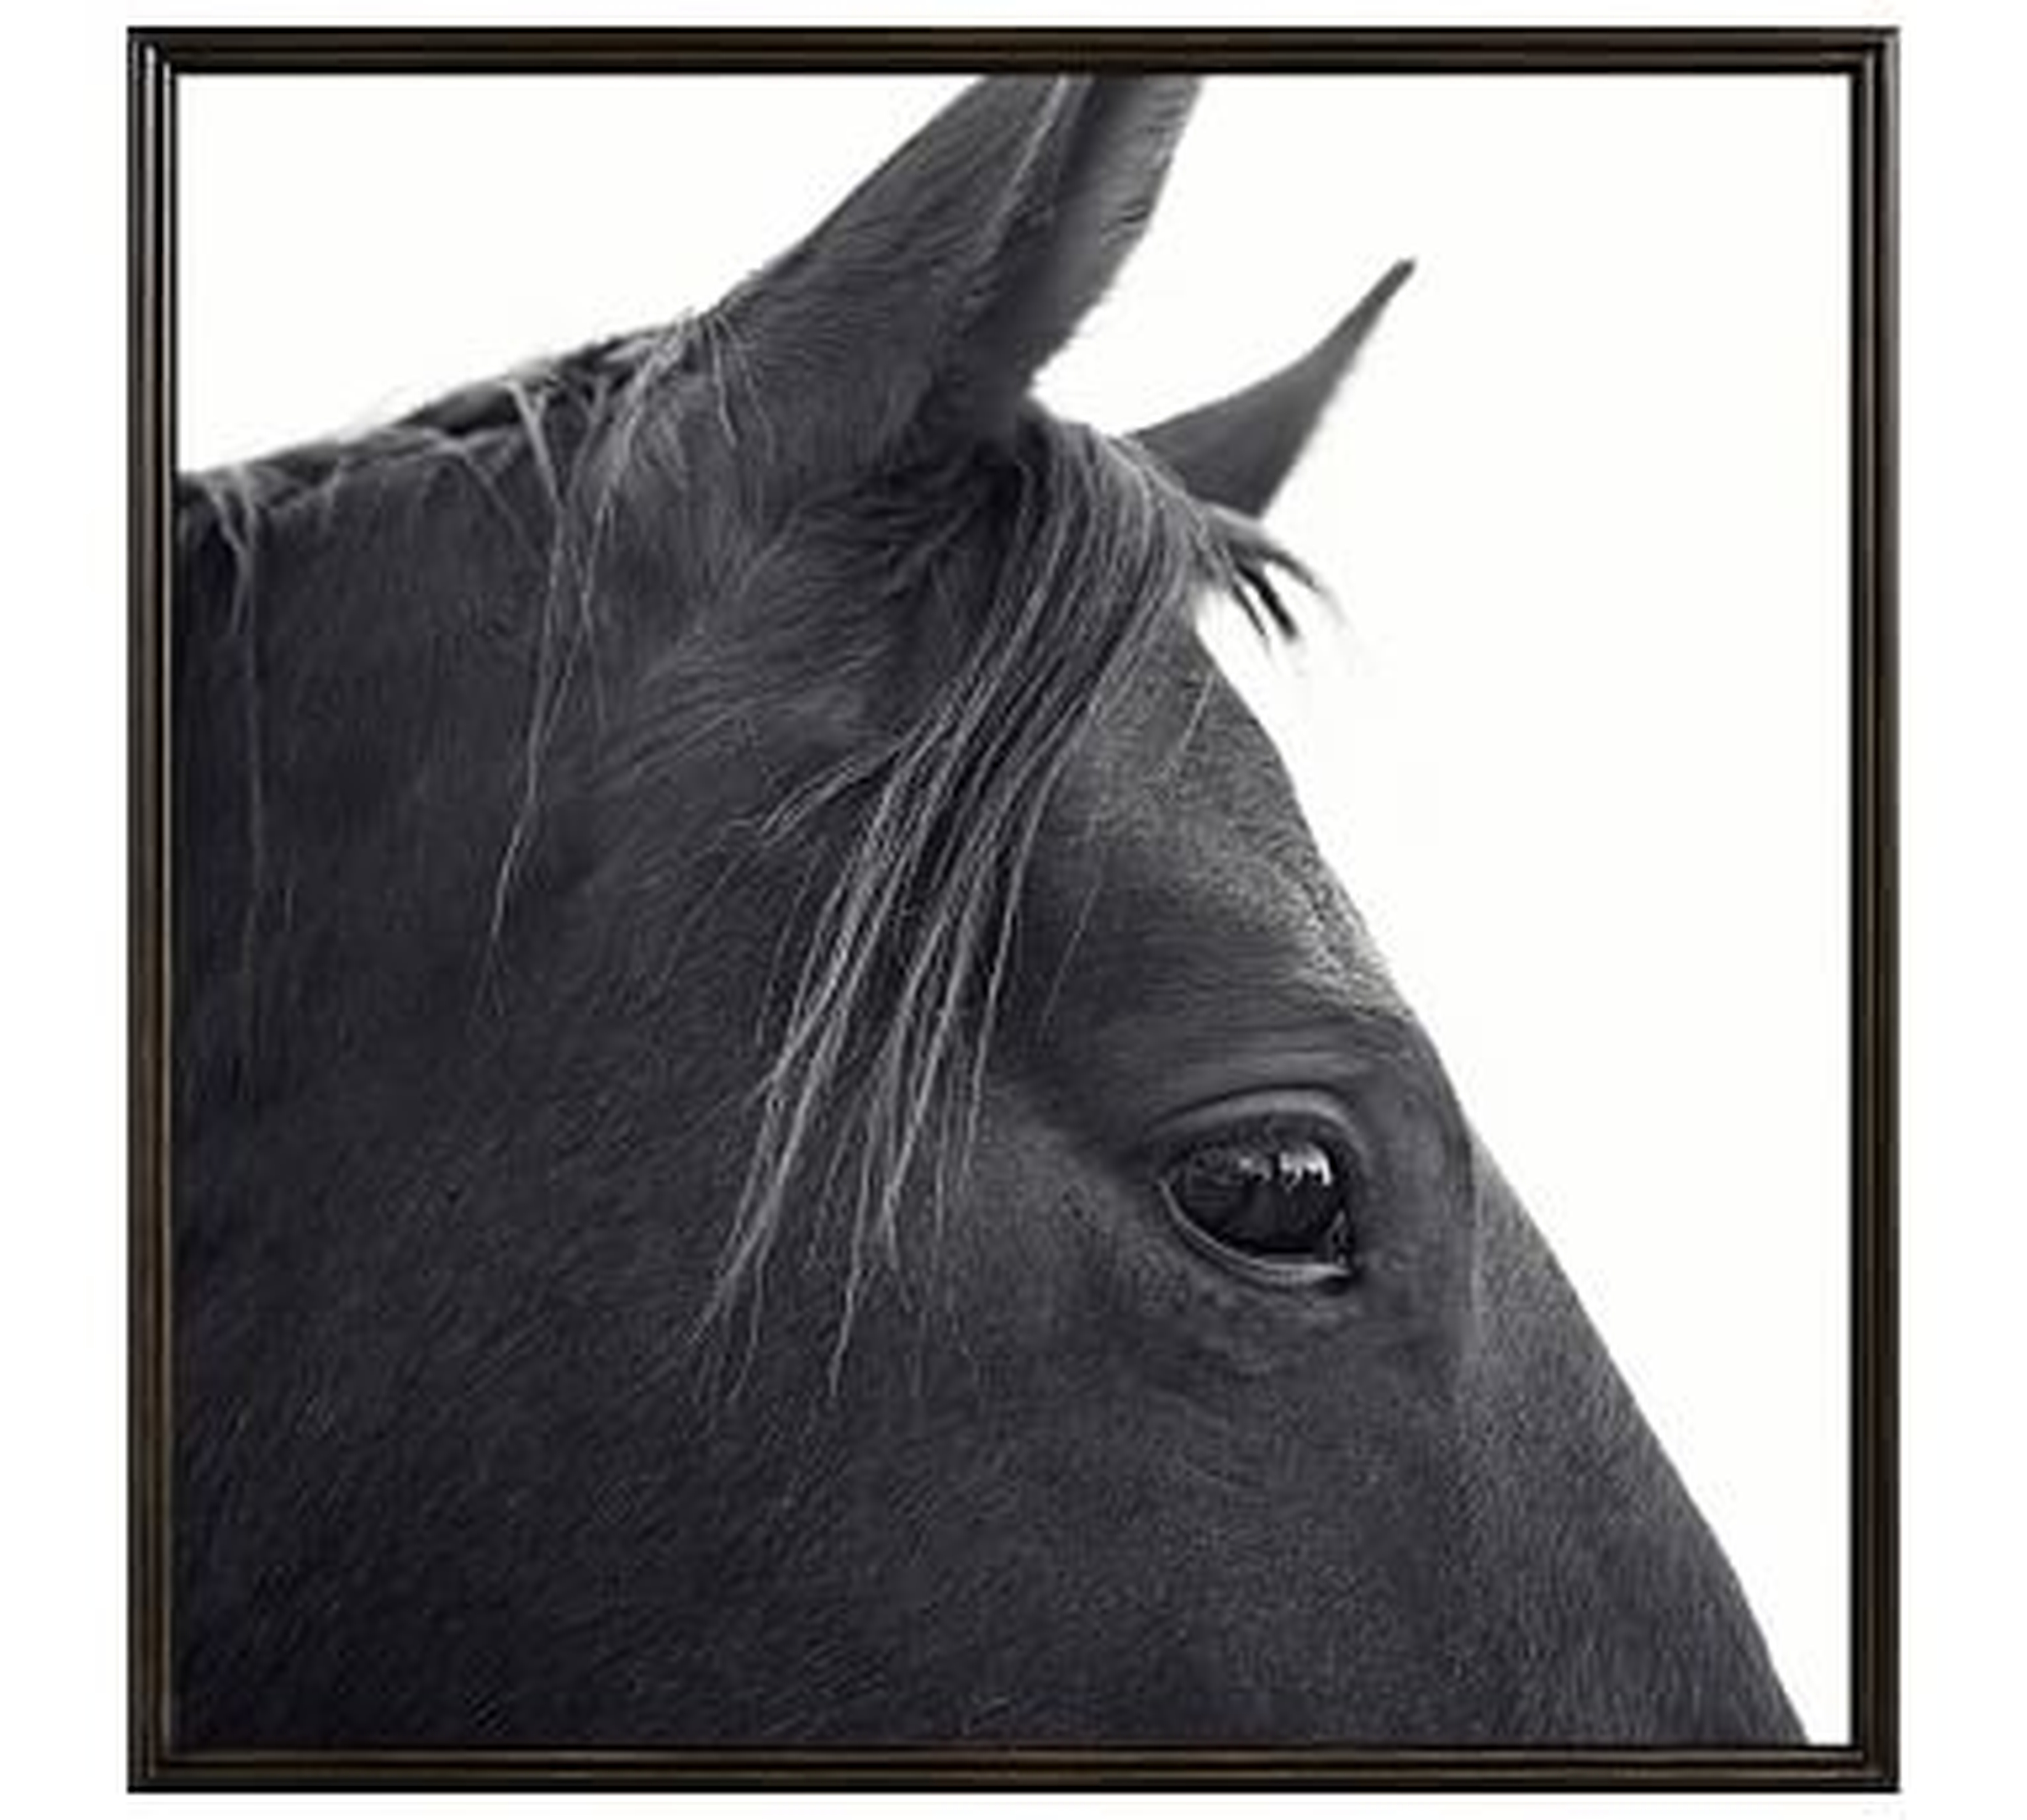 Dark Horse in Profile Framed Print by Jennifer Meyers, 48 x 48", Ridged Distressed Frame, Black, No Mat - Pottery Barn